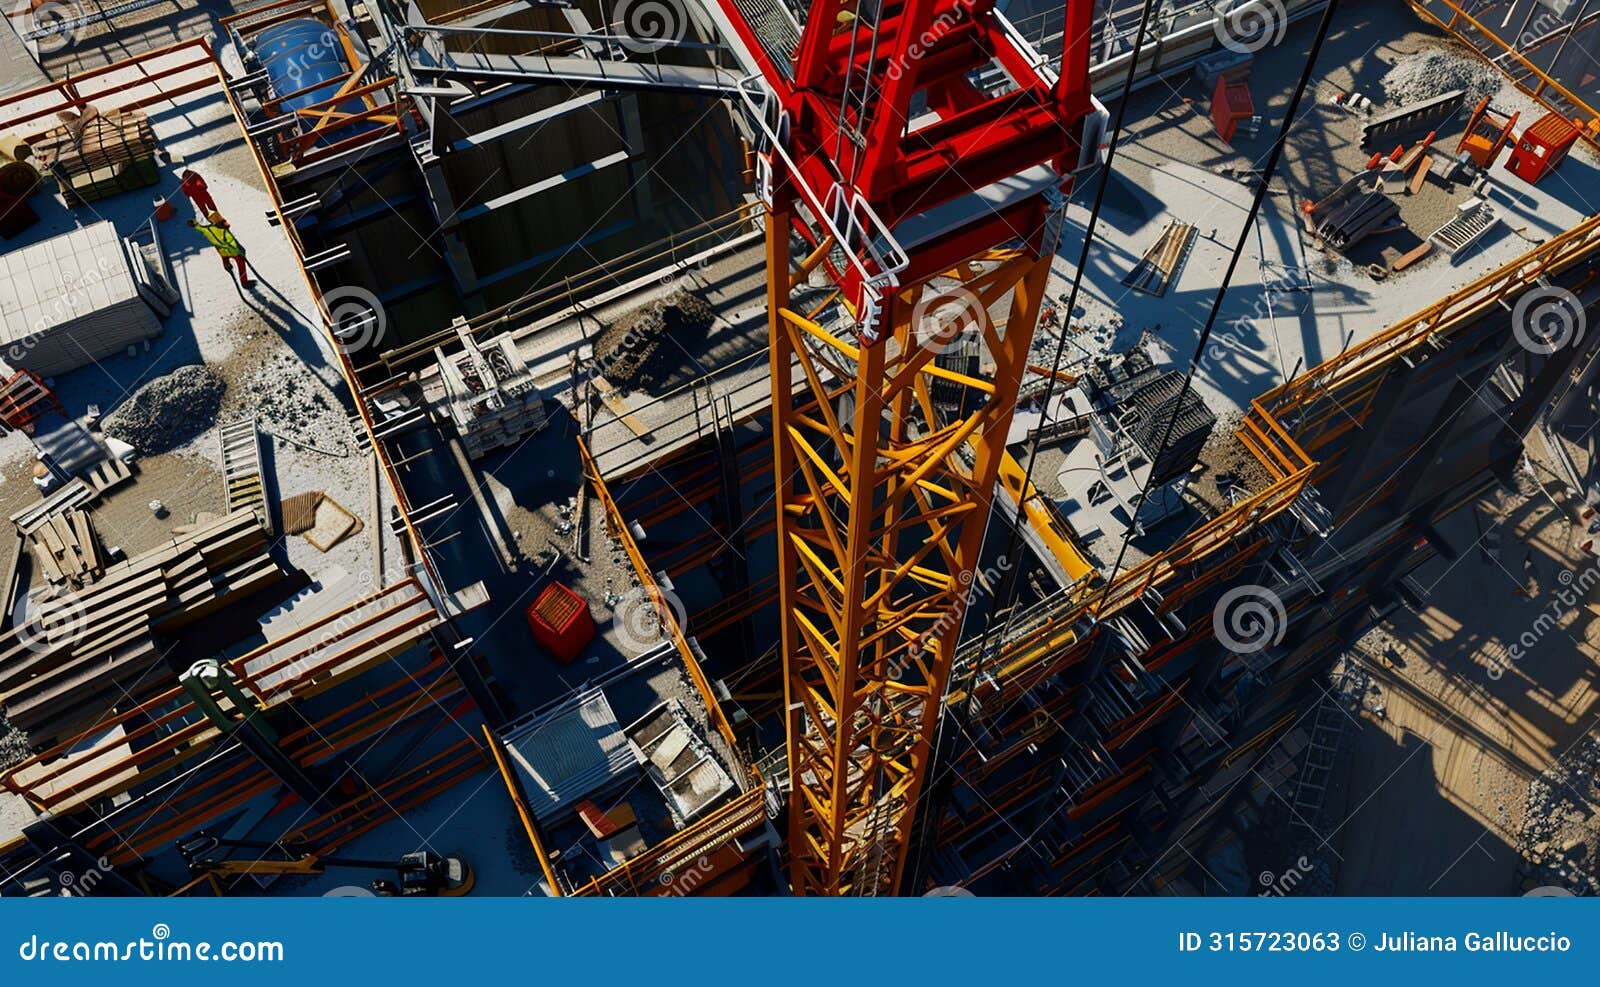 construction of tower crane using torque